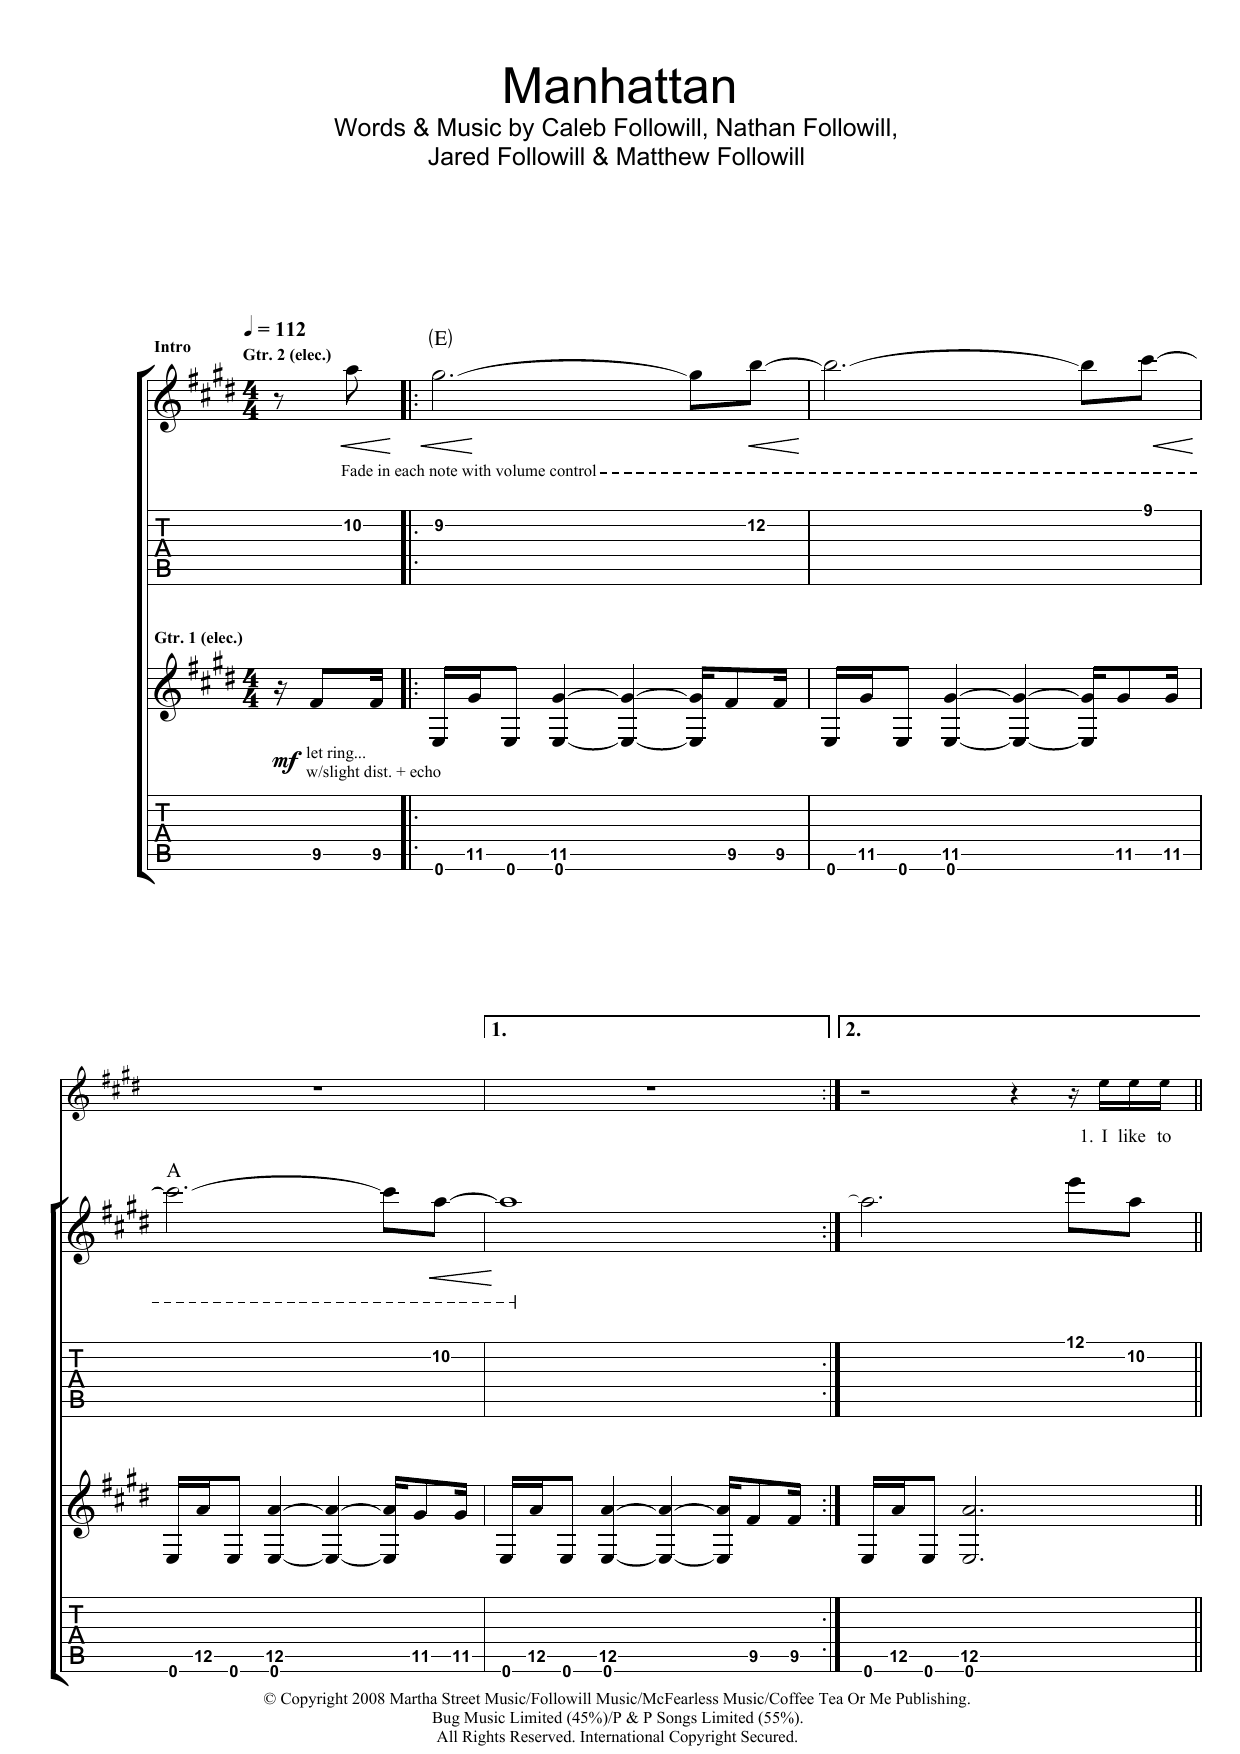 Kings Of Leon Manhattan Sheet Music Notes & Chords for Guitar Tab - Download or Print PDF